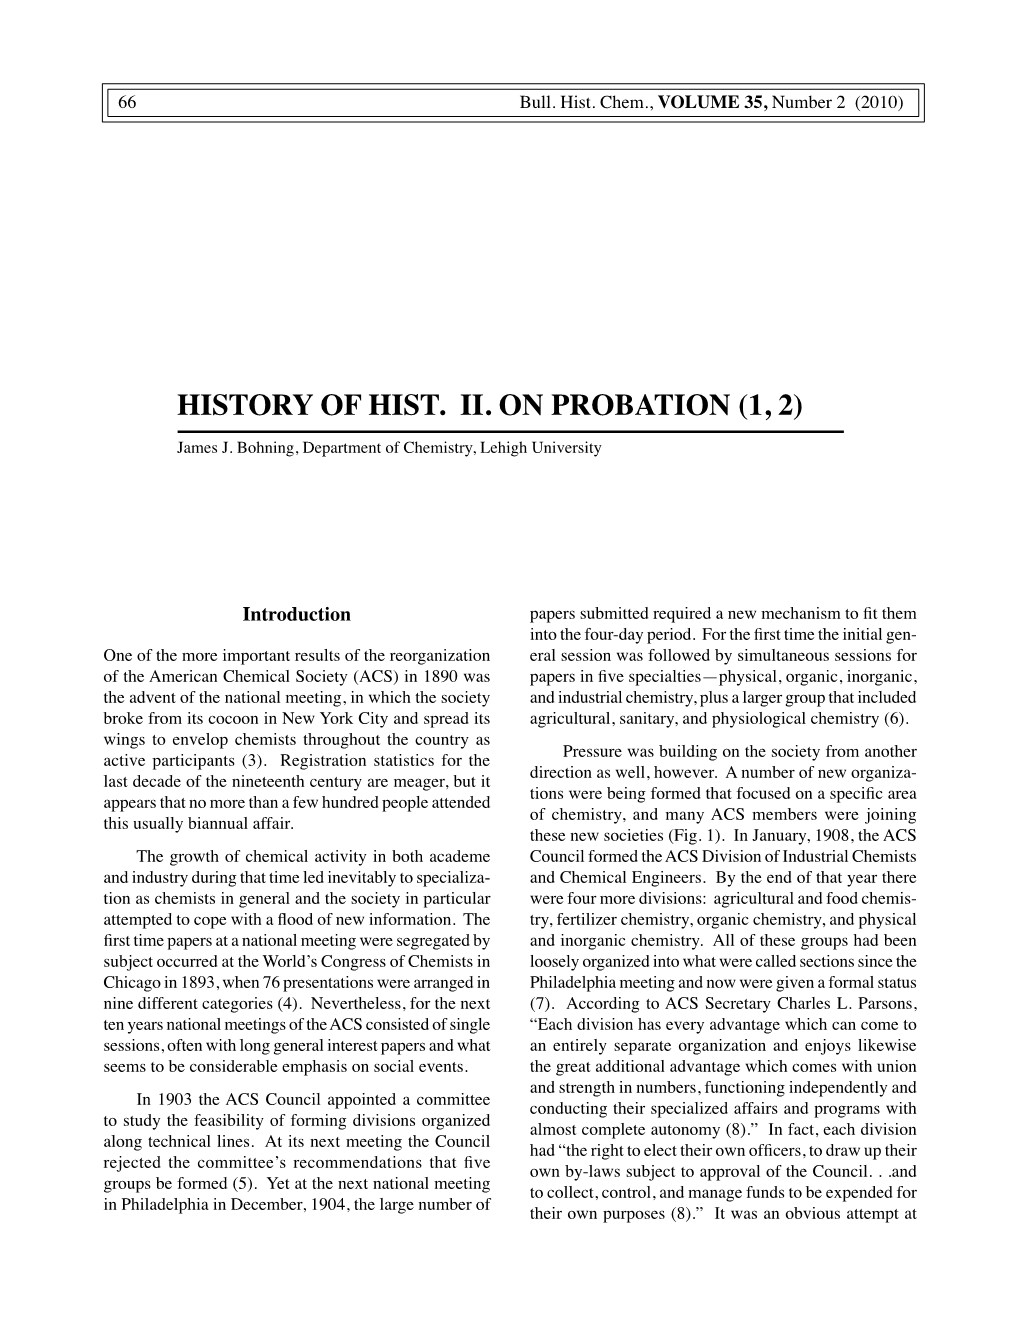 HISTORY of HIST. II. on PROBATION (1, 2) James J